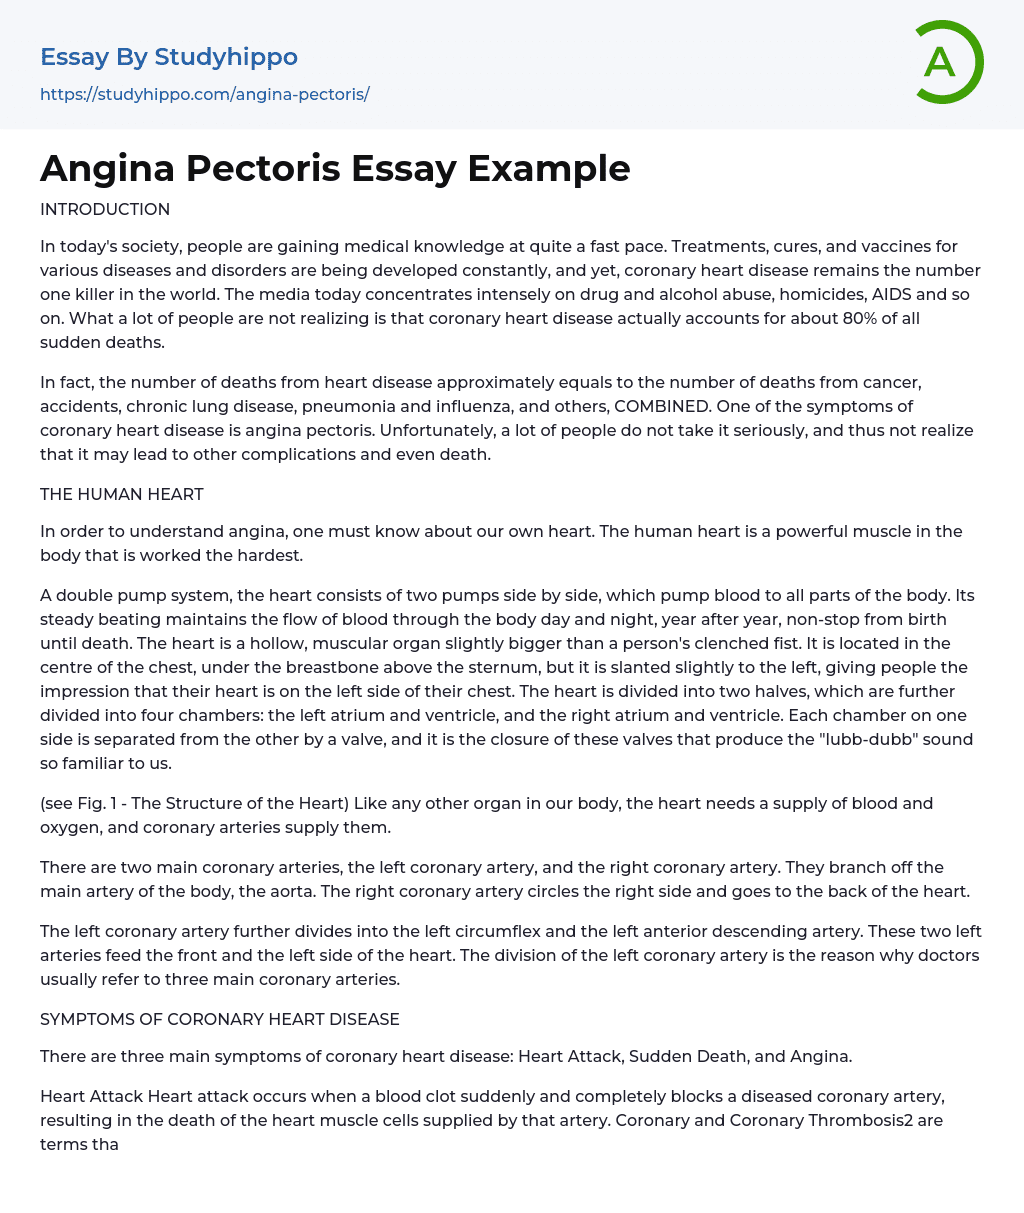 Angina Pectoris Essay Example